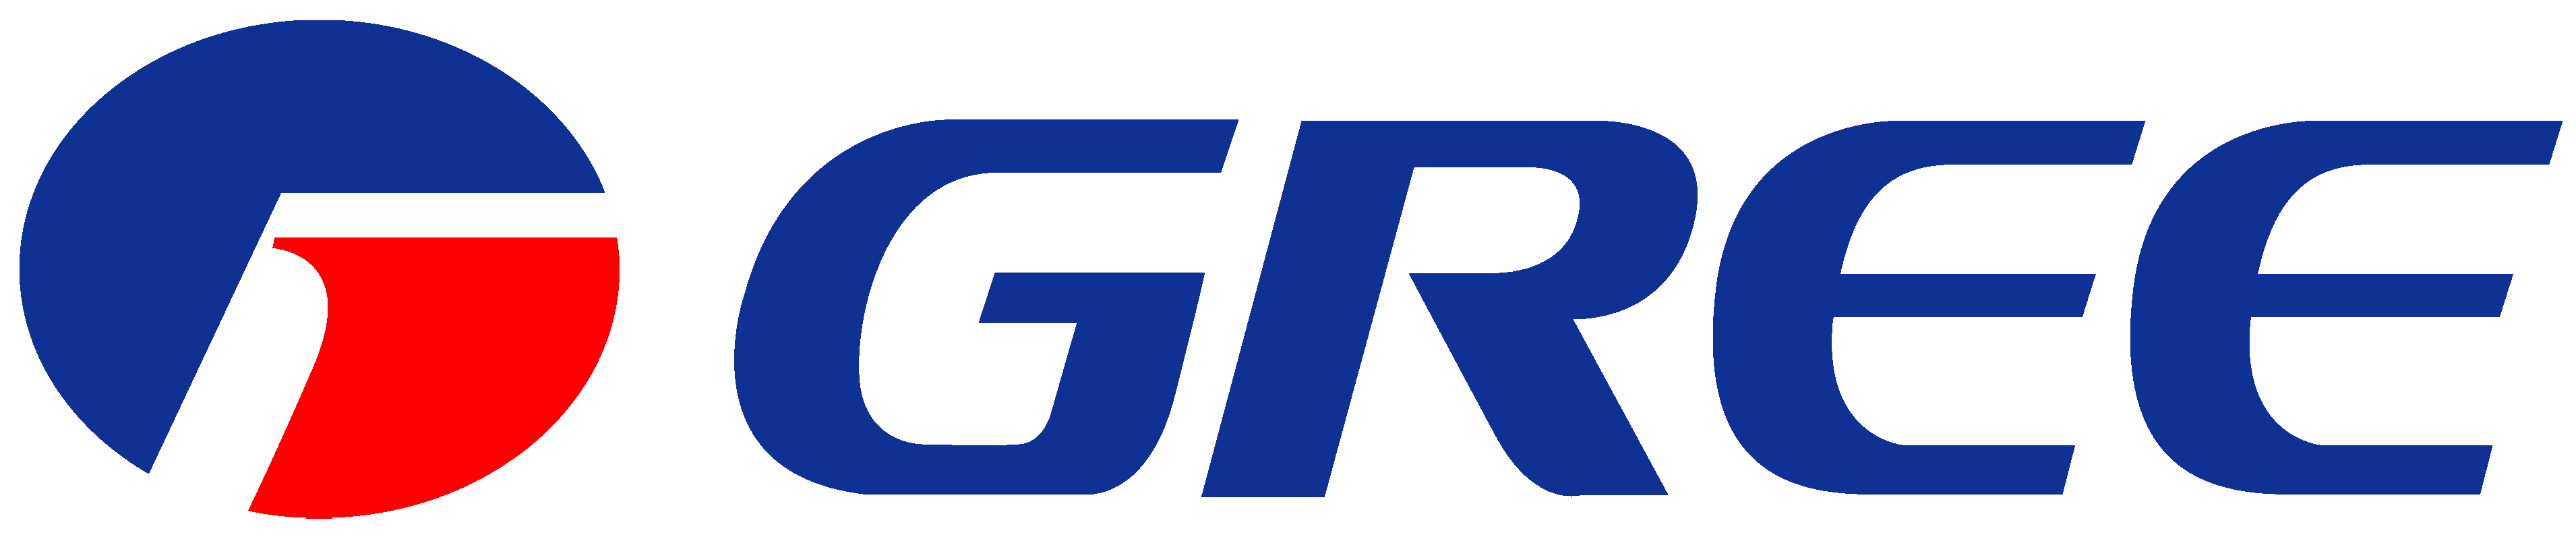 Gree - Logo